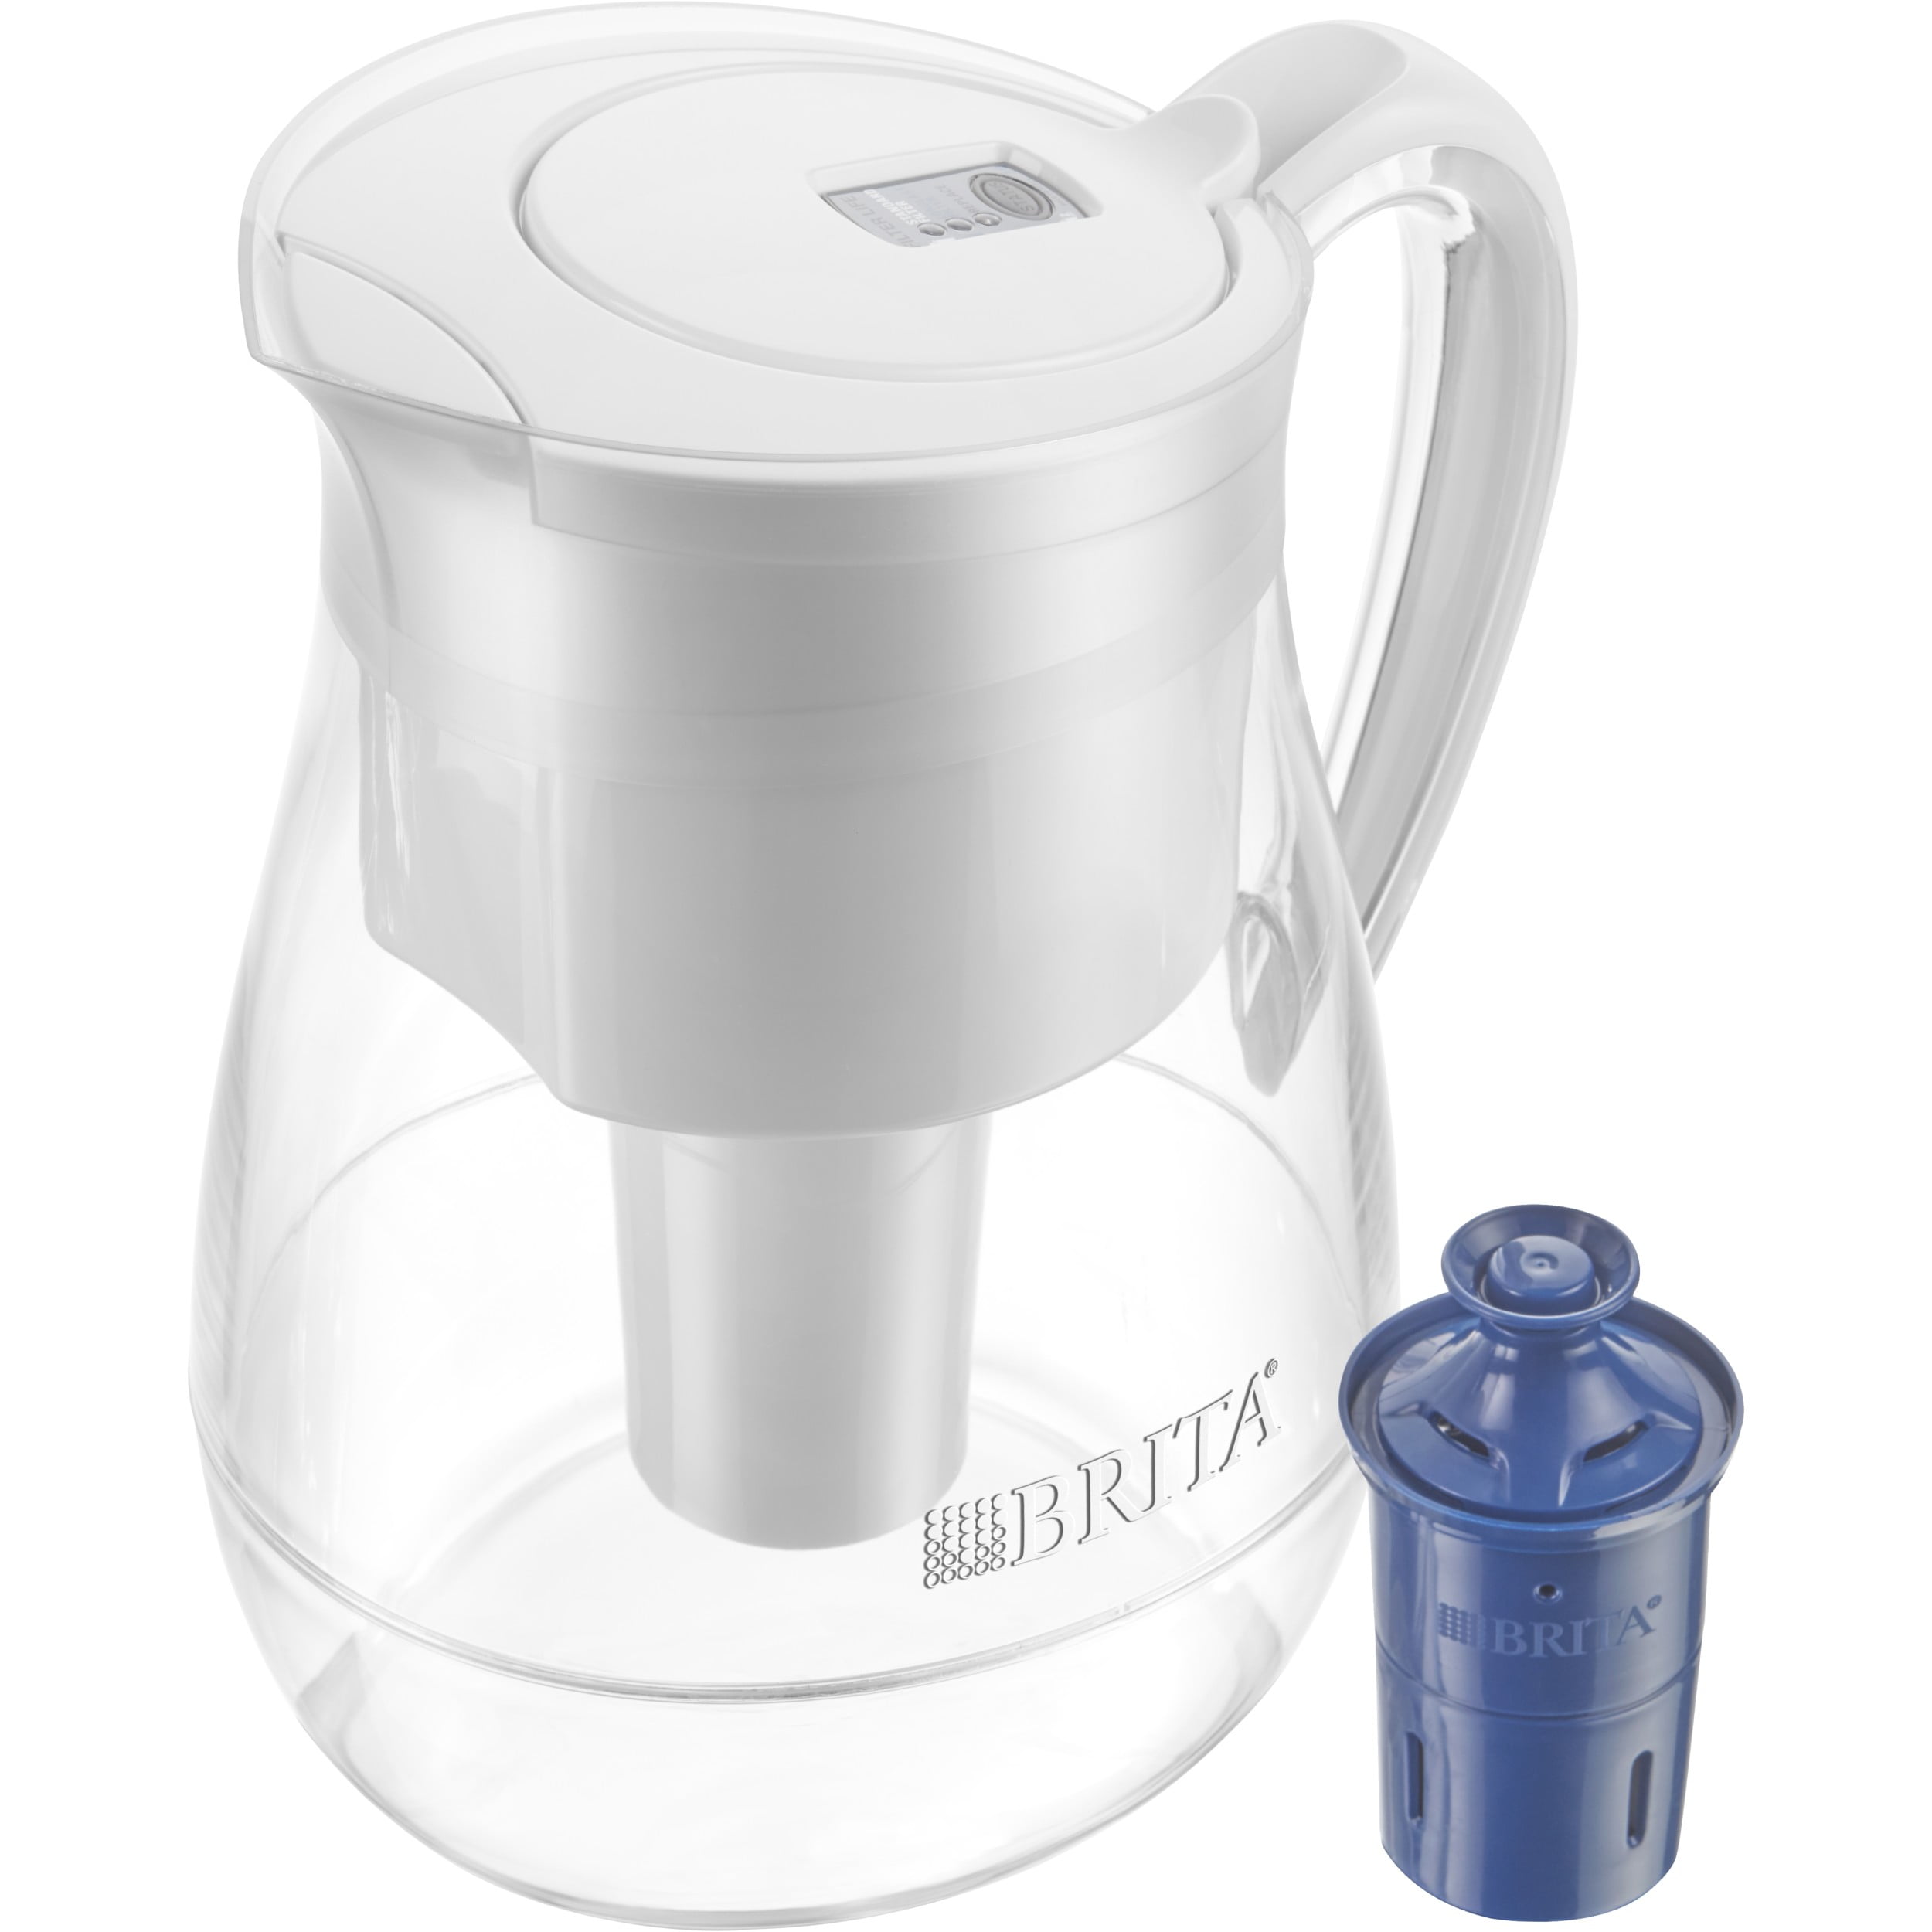 brita-monterey-longlast-filter-water-filter-pitcher-10-cup-white